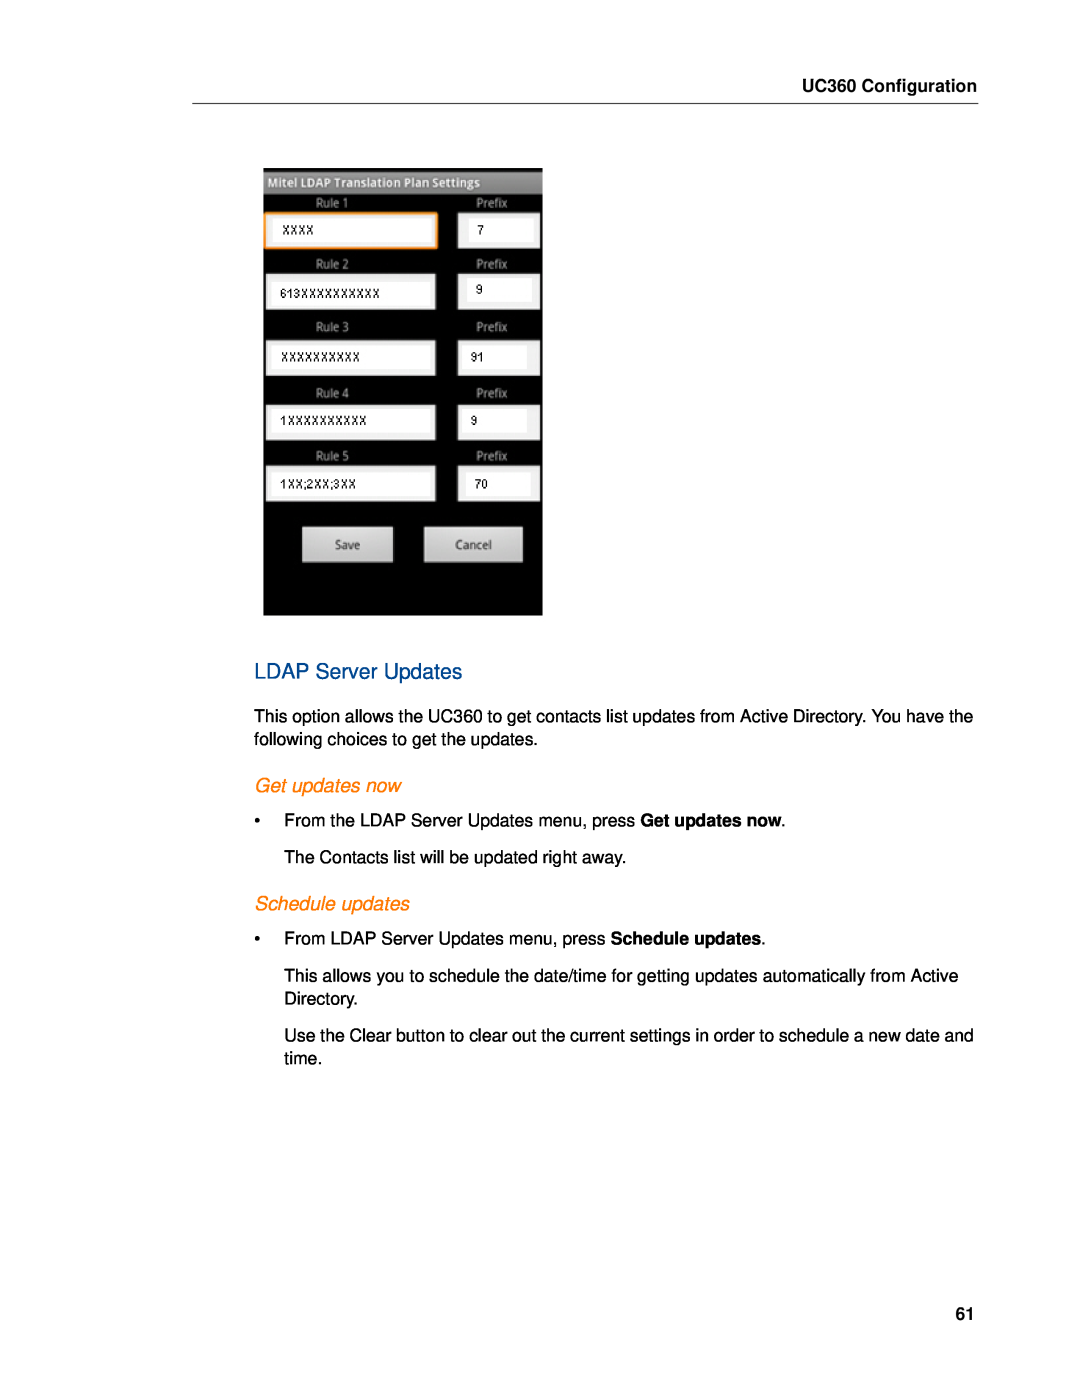 Mitel manual LDAP Server Updates, Get updates now, Schedule updates, UC360 Configuration 